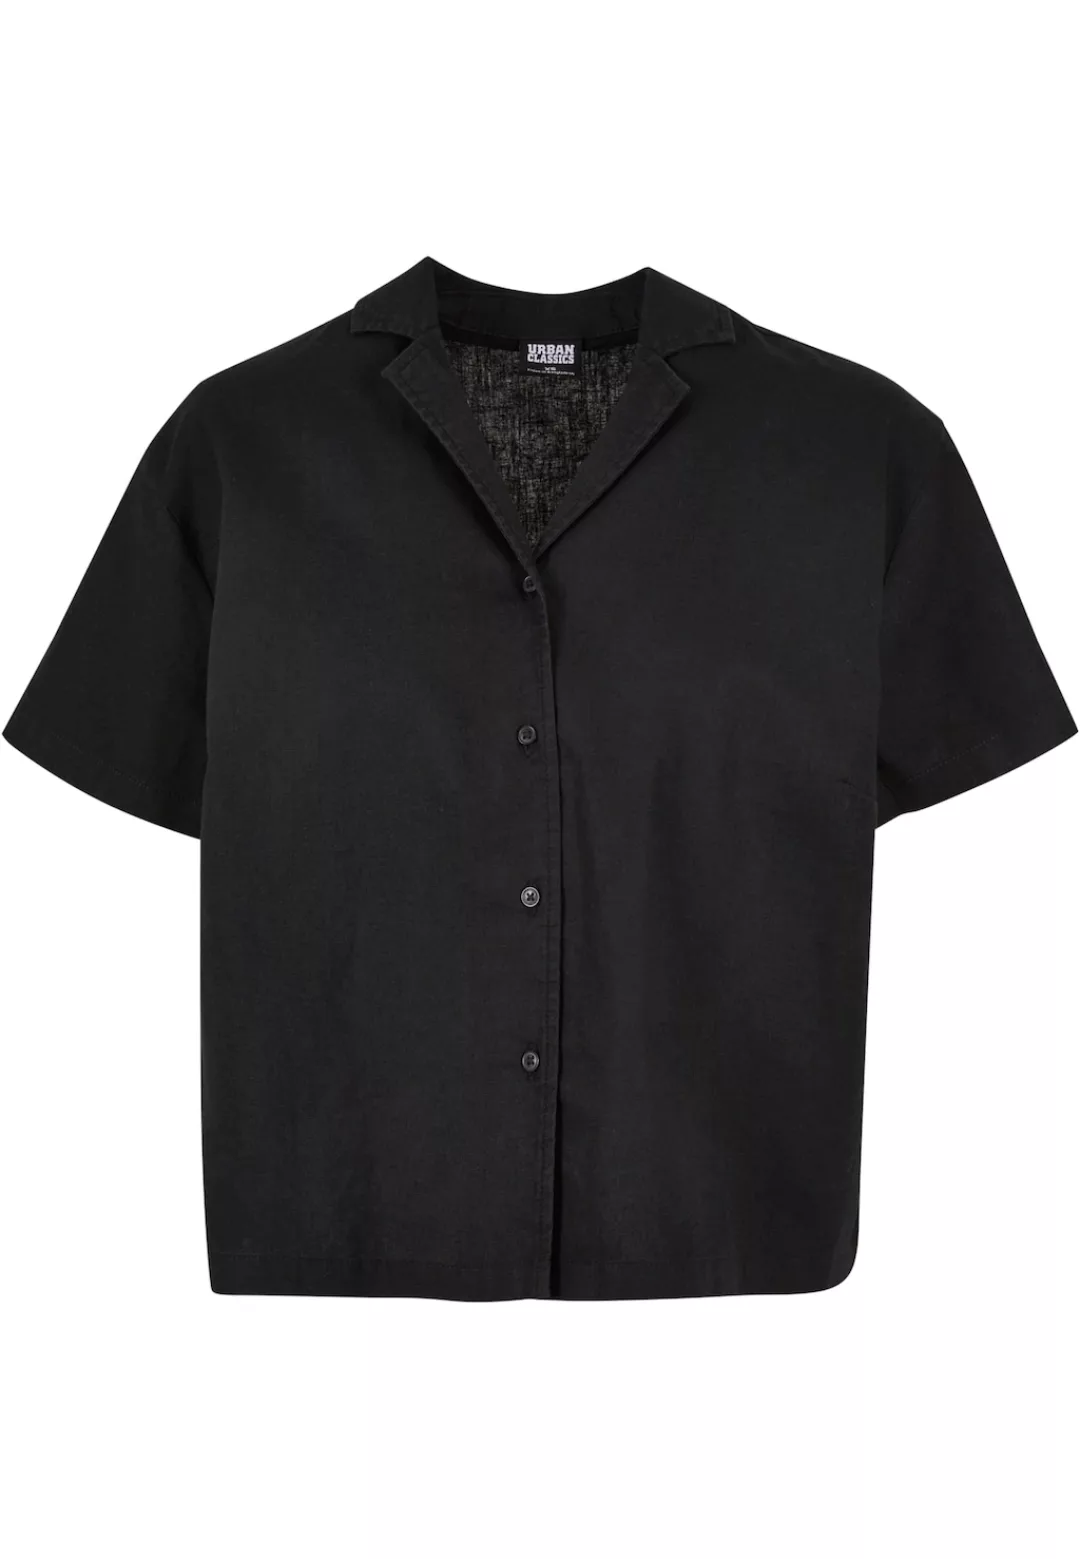 URBAN CLASSICS Klassische Bluse "Damen Ladies Linen Mixed Resort Shirt" günstig online kaufen